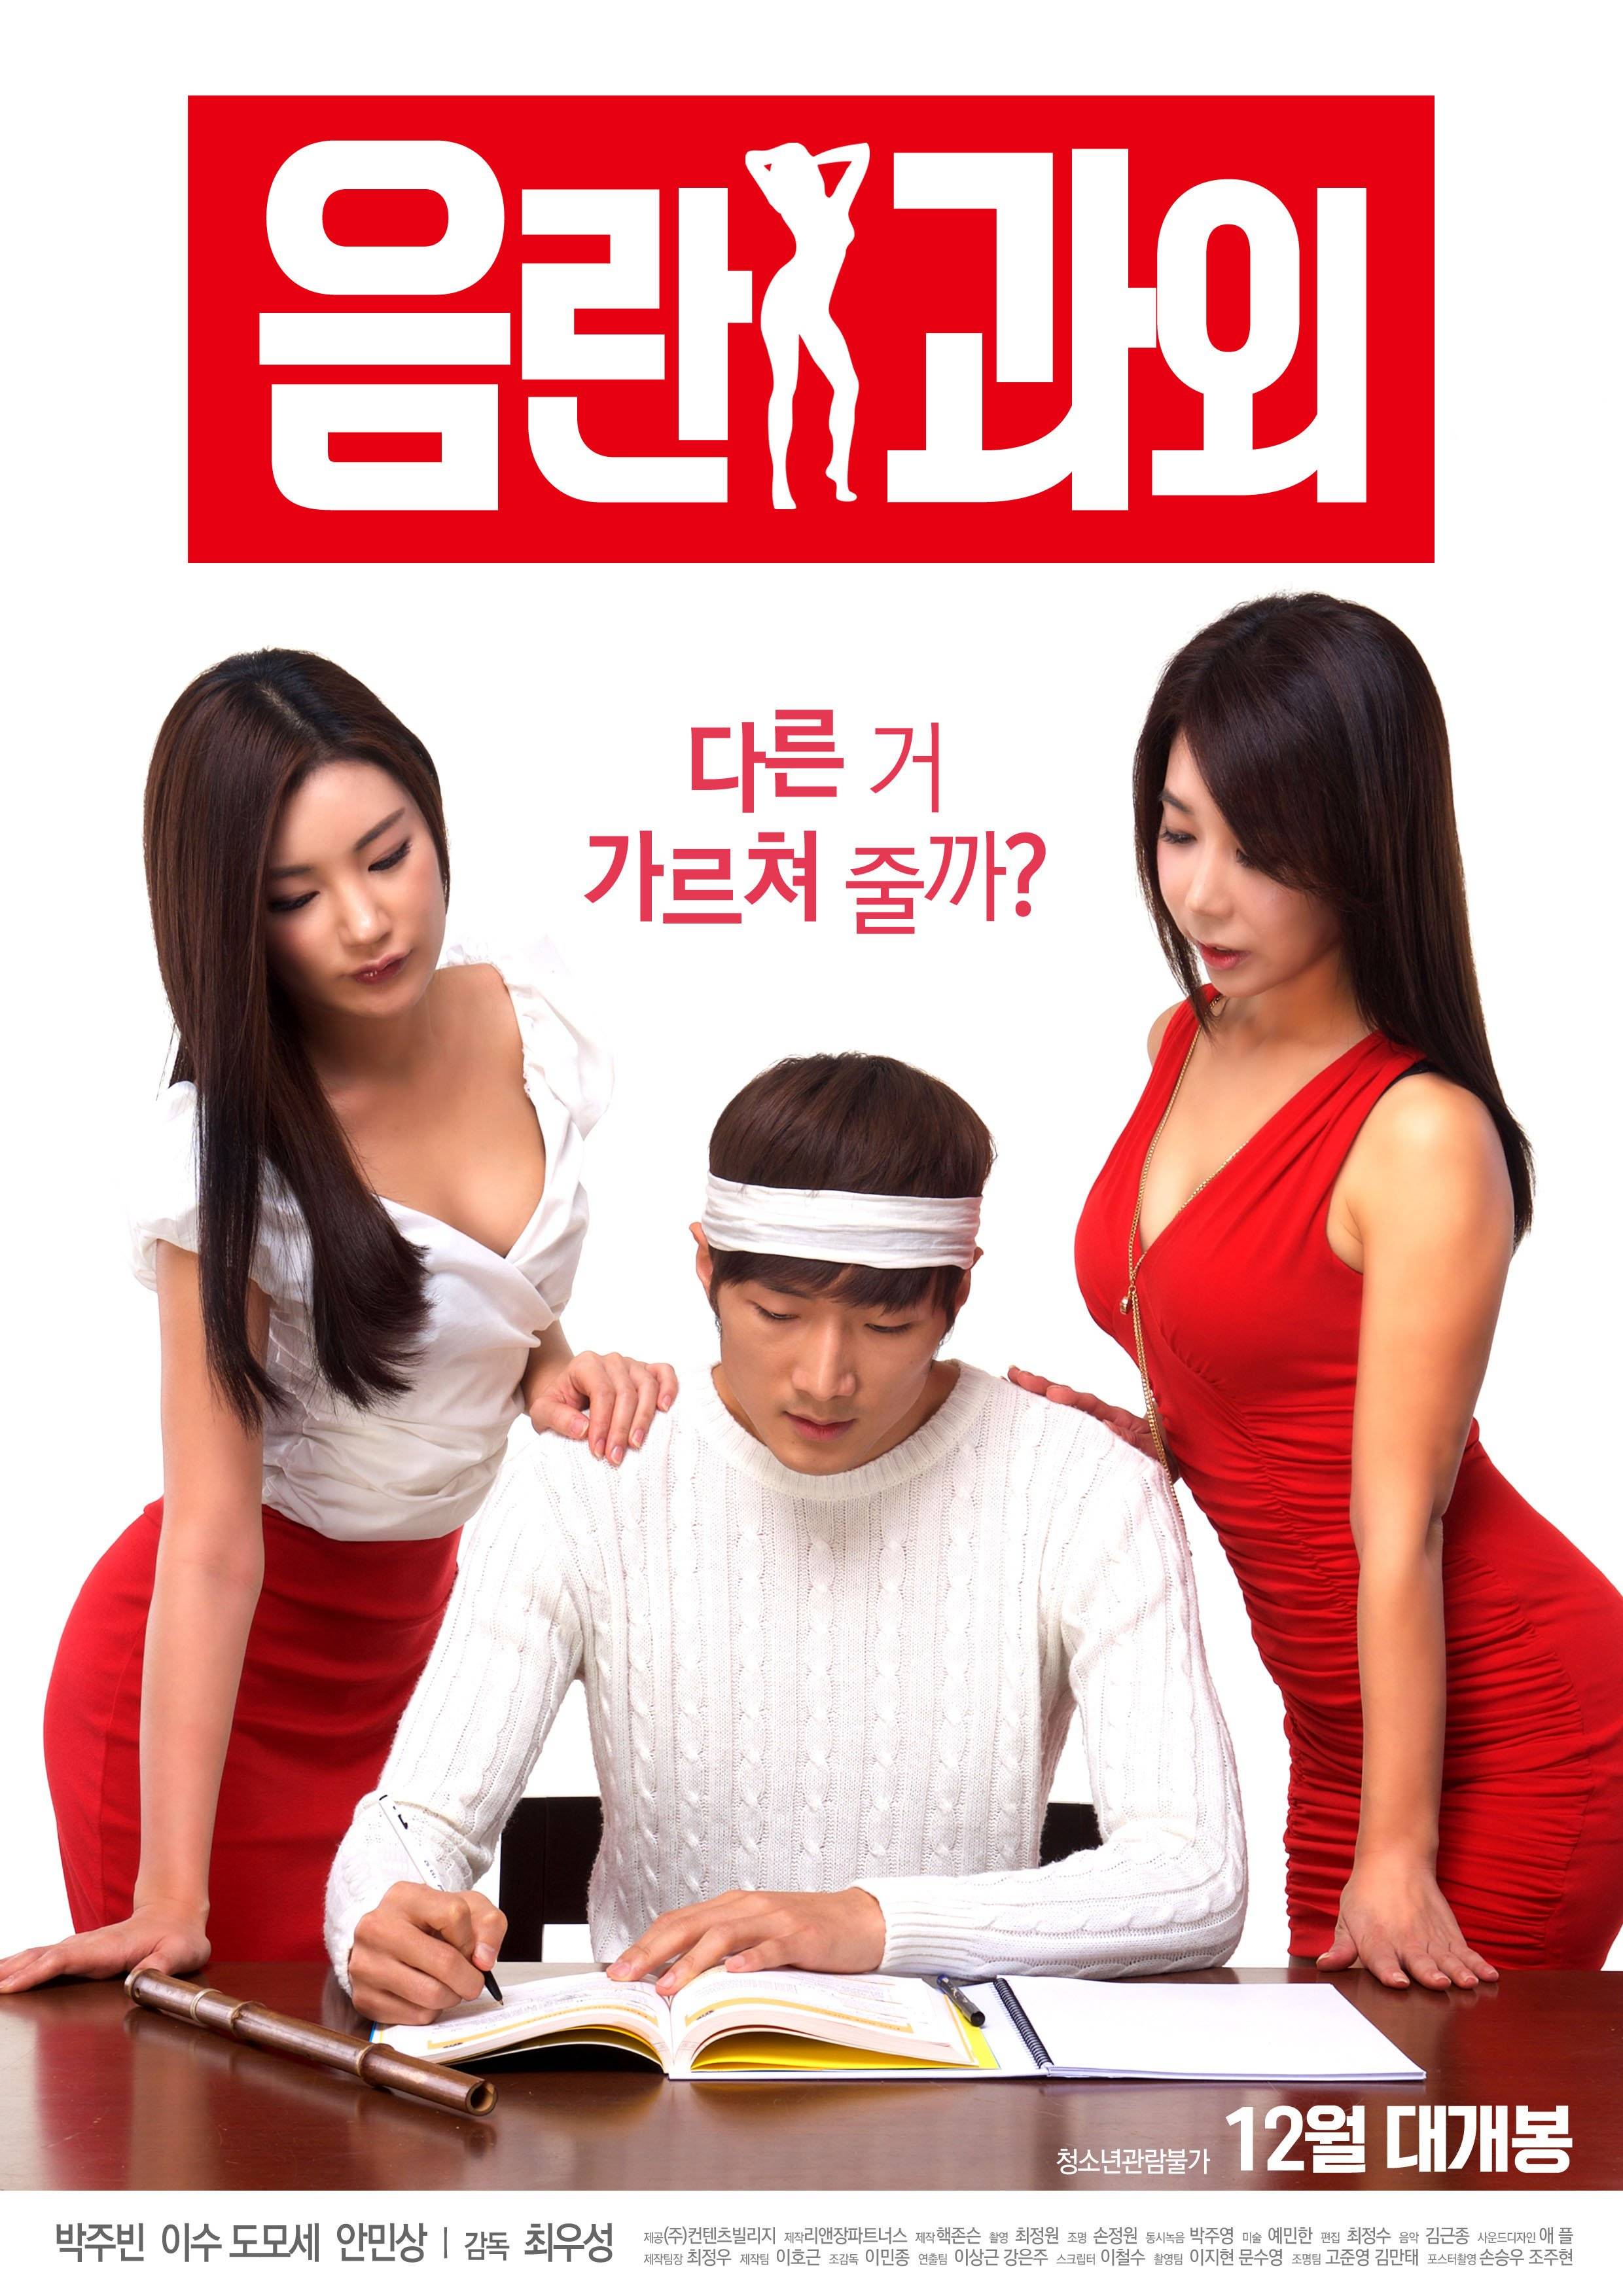 Korean Movies Opening Today 2016 12 20 In Korea Hancinema The Korean Movie And Drama Database